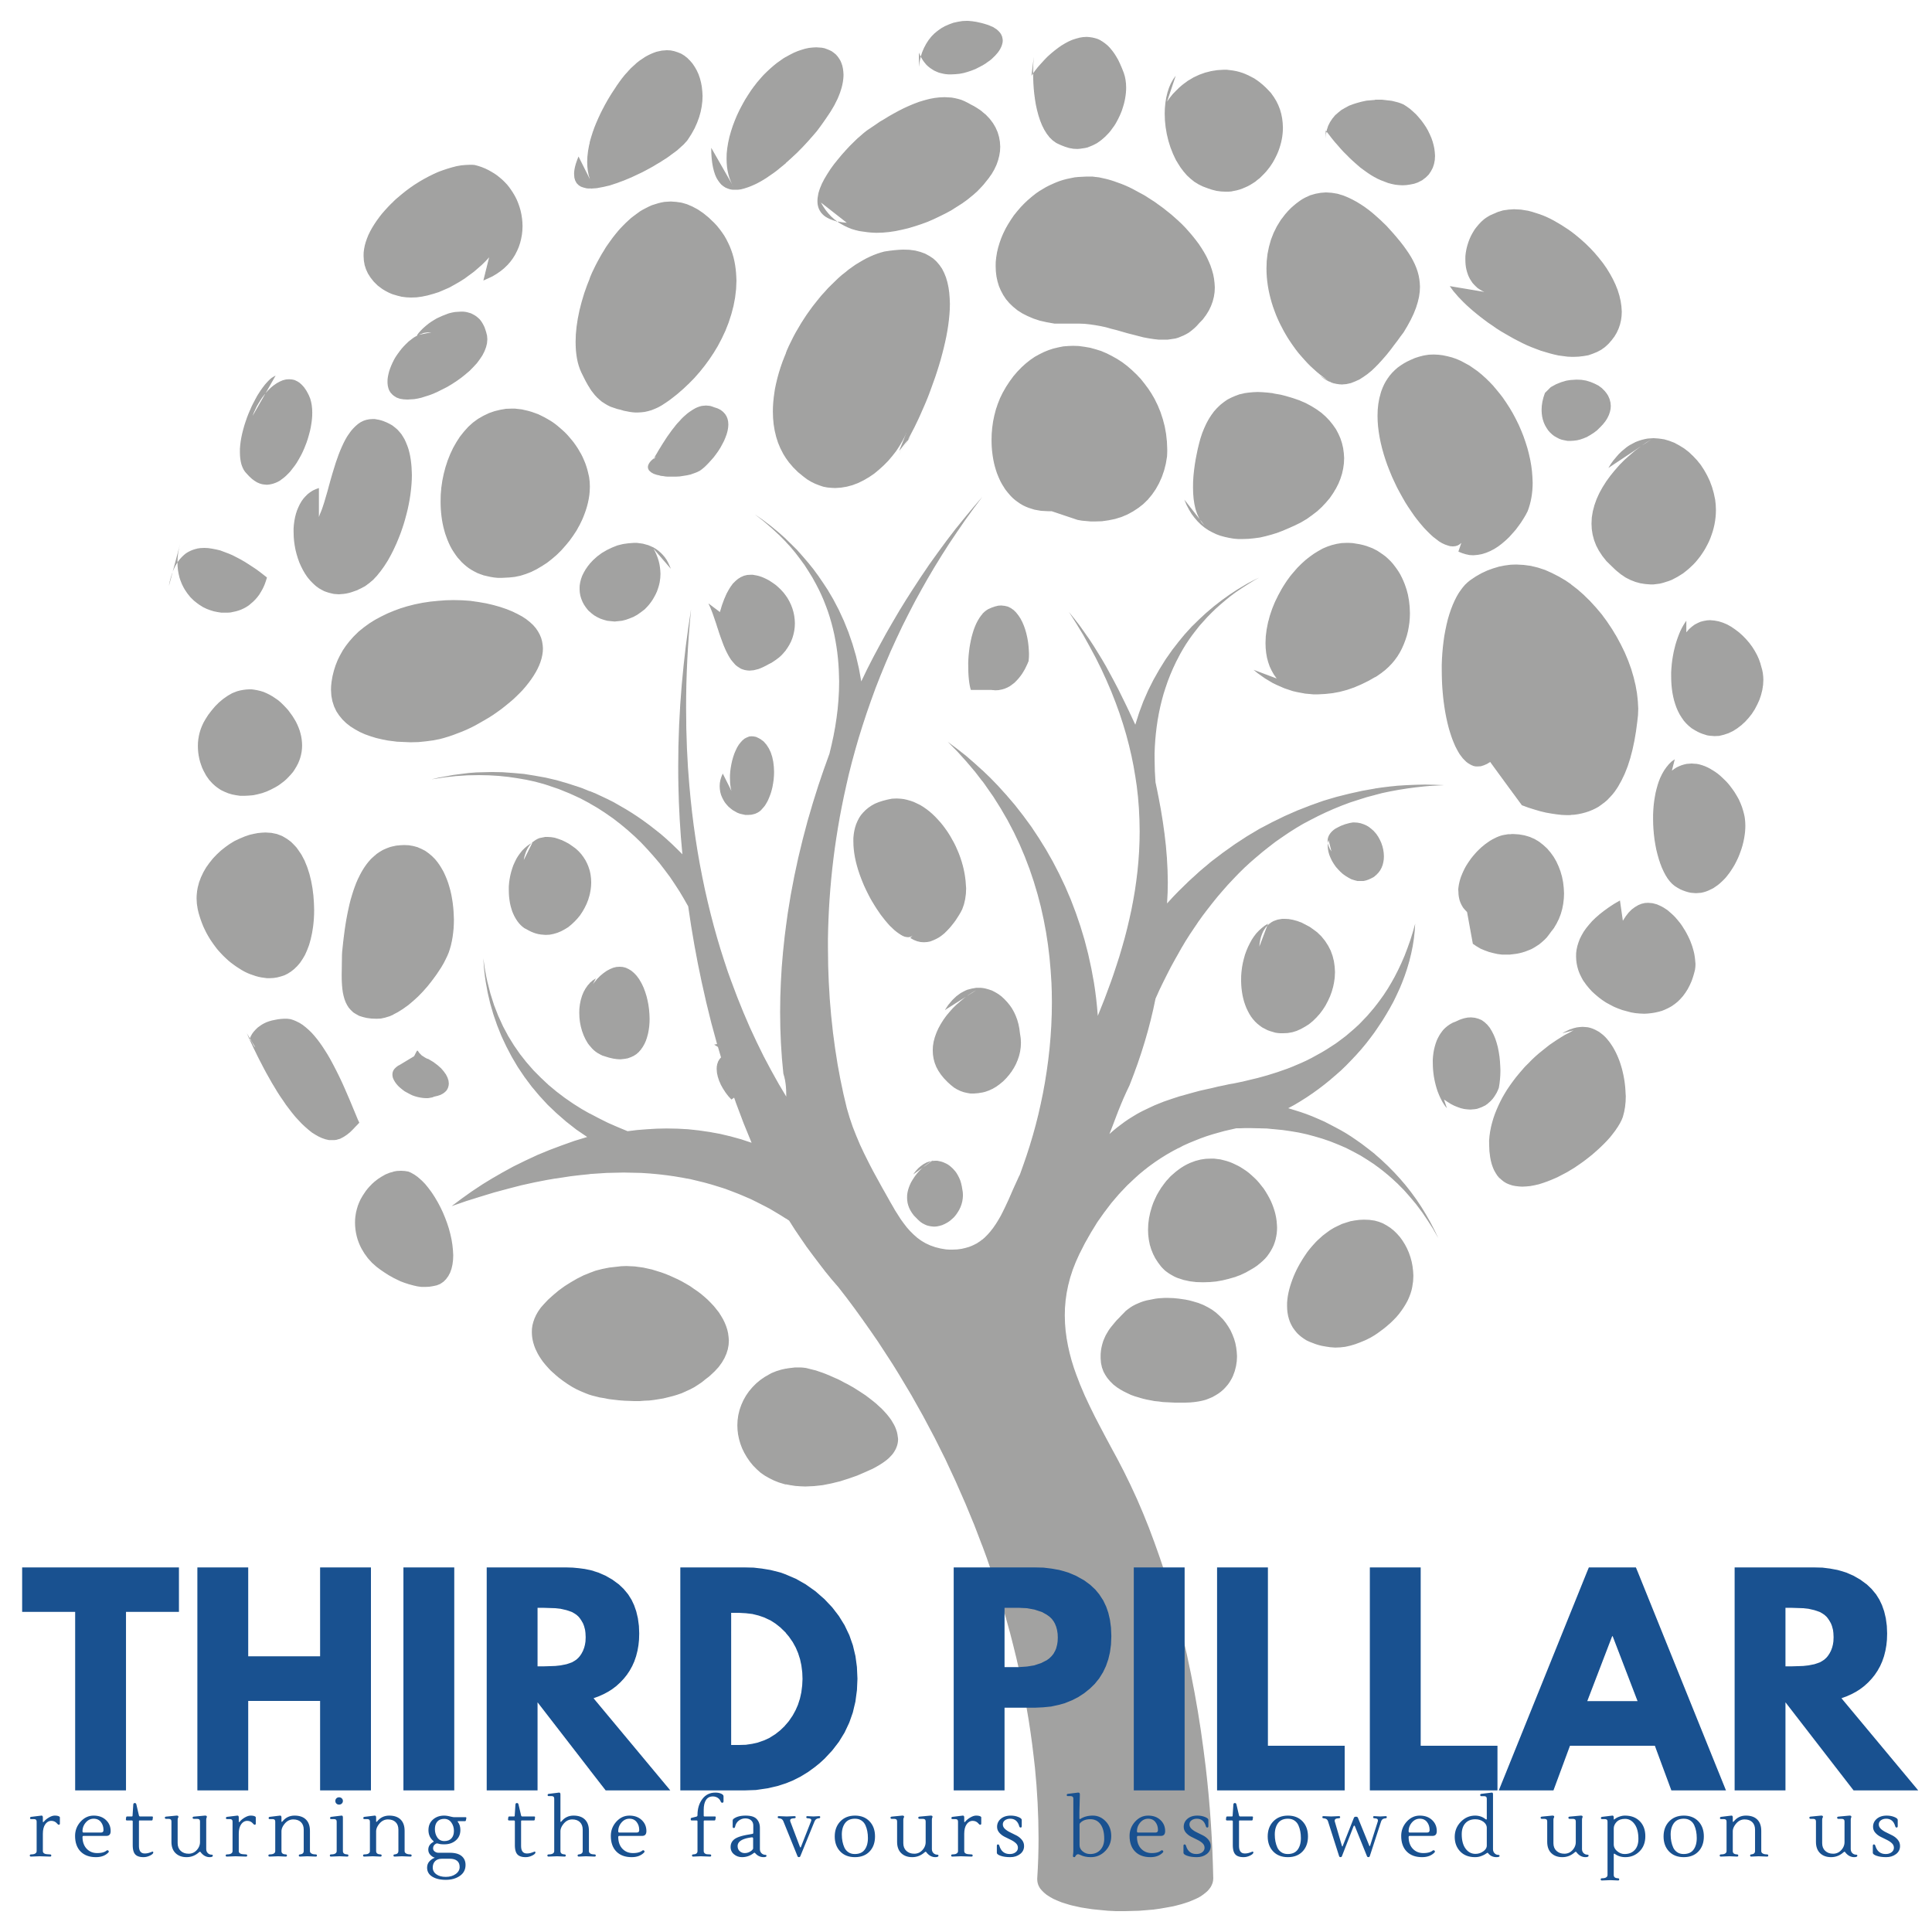 Third Pillar  - 100% Donation Policy